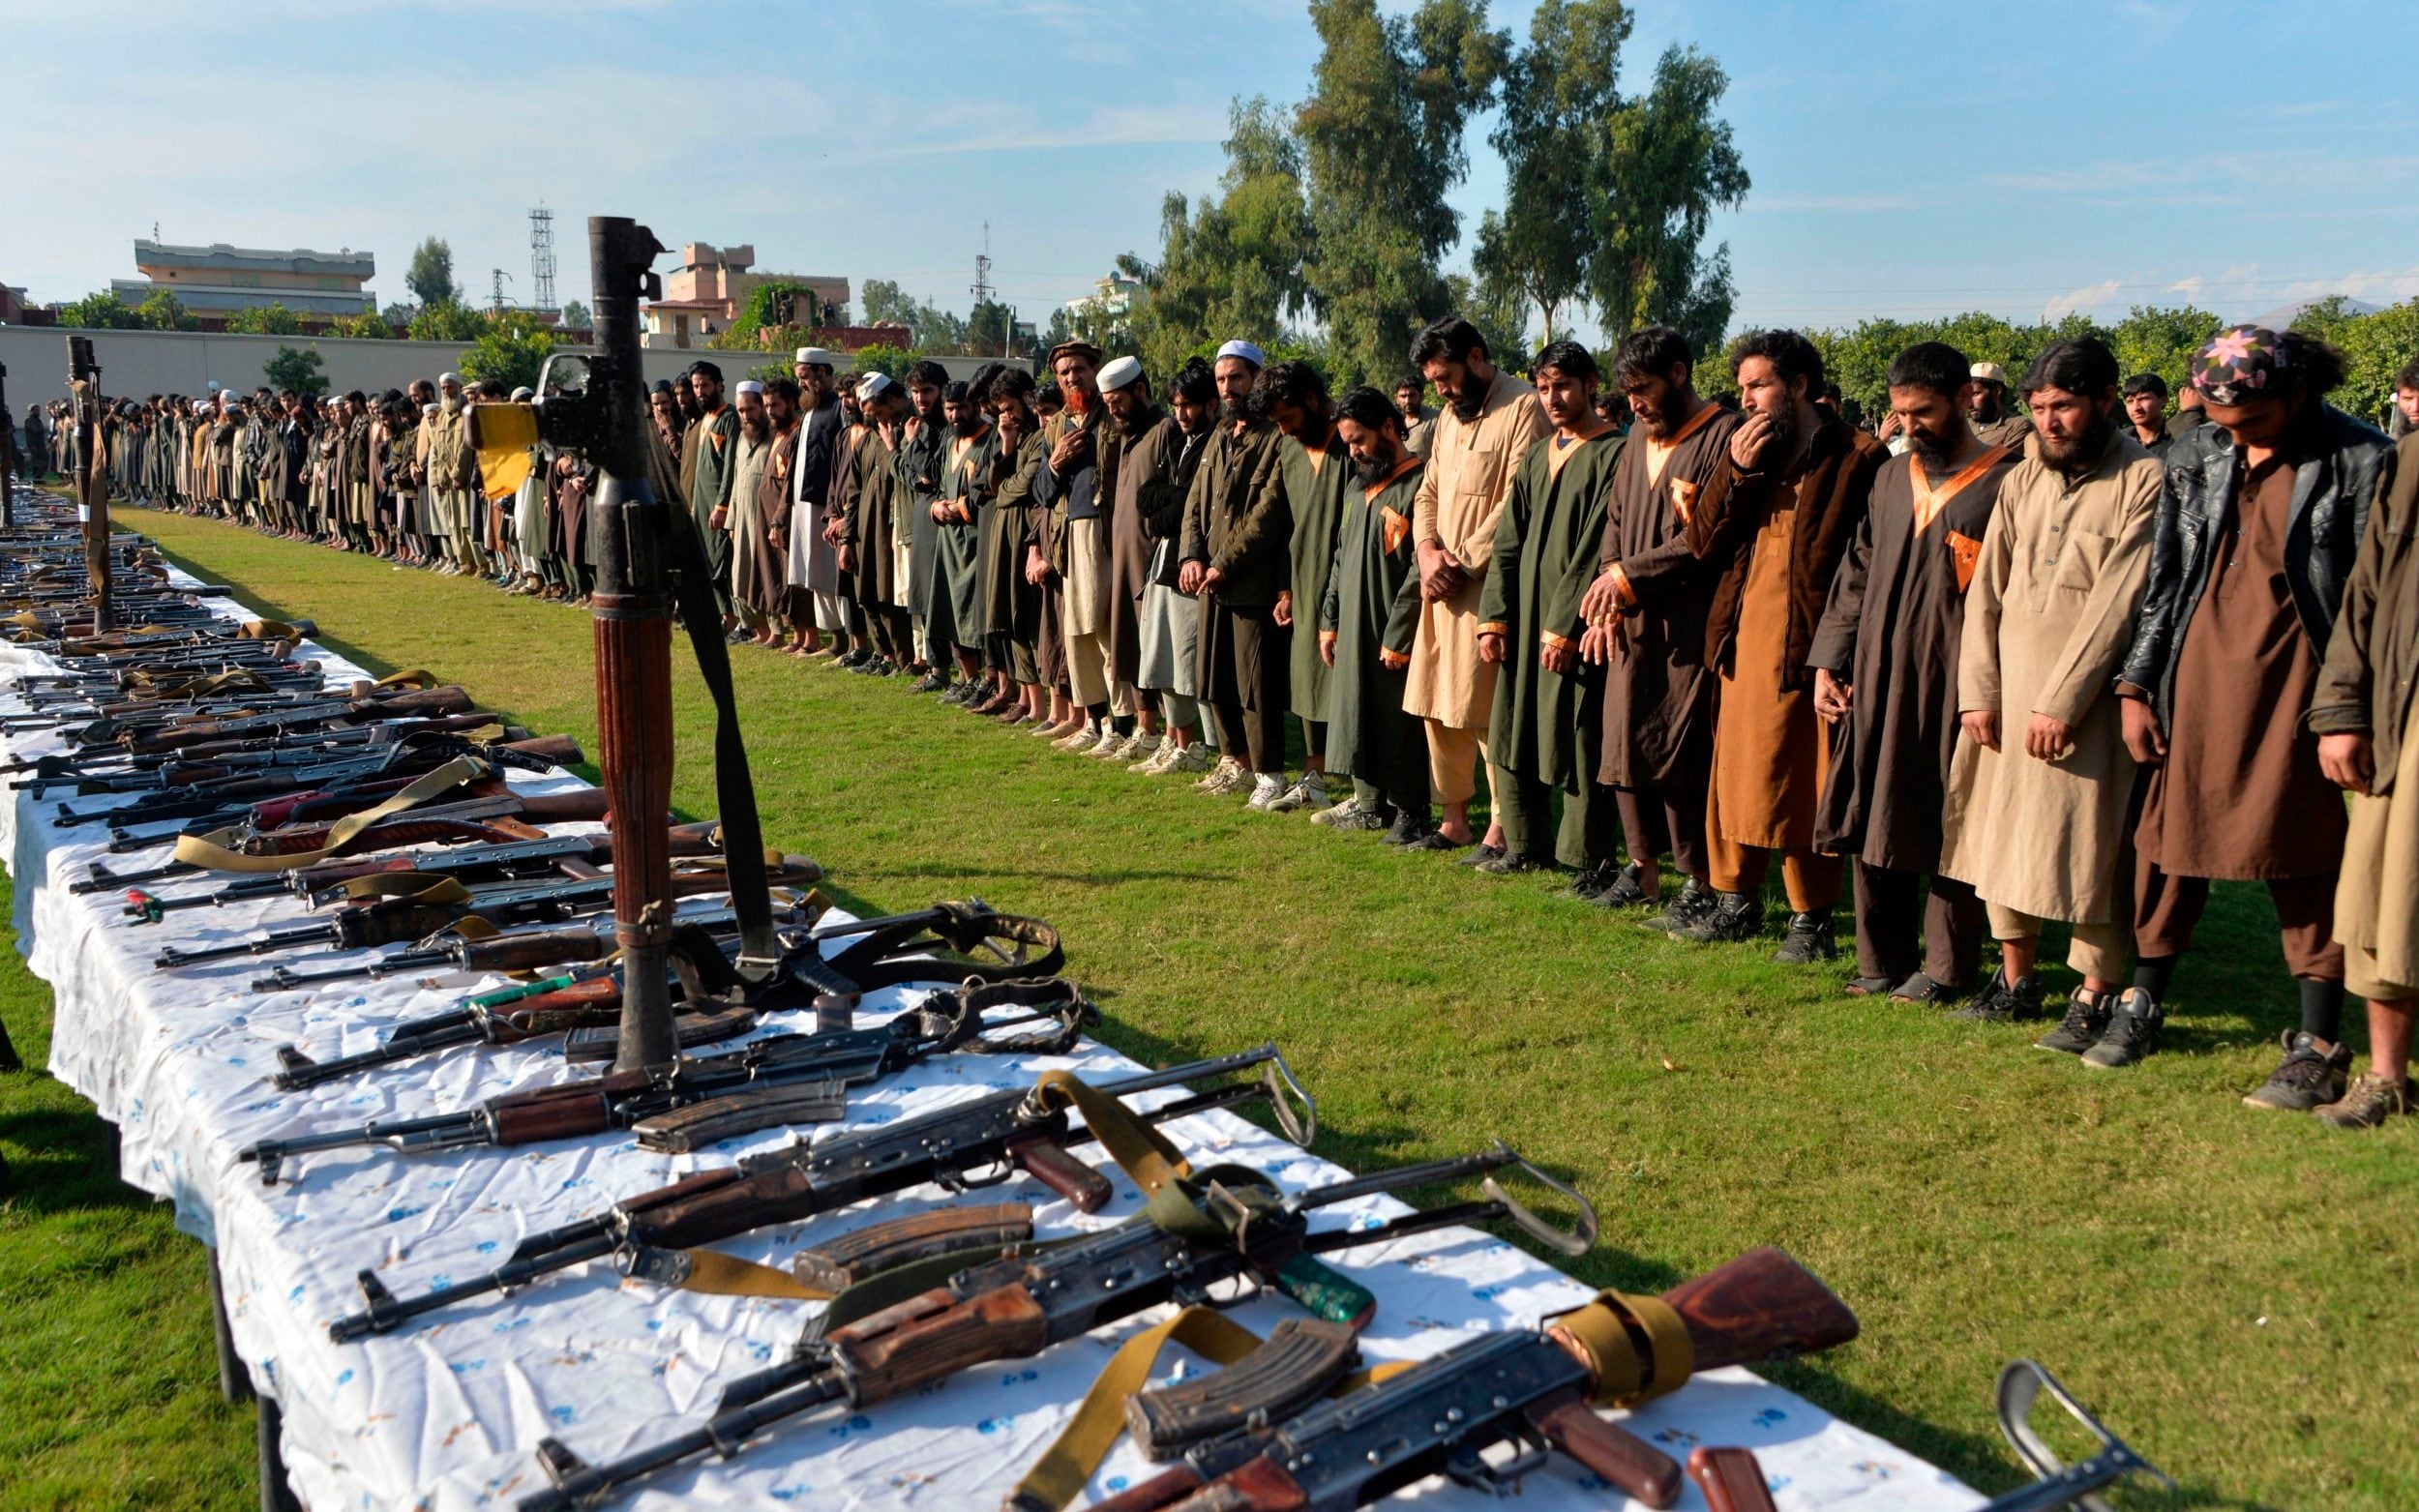 Afghanistan Taliban crisis: Who are Islamic State-Khorasan?